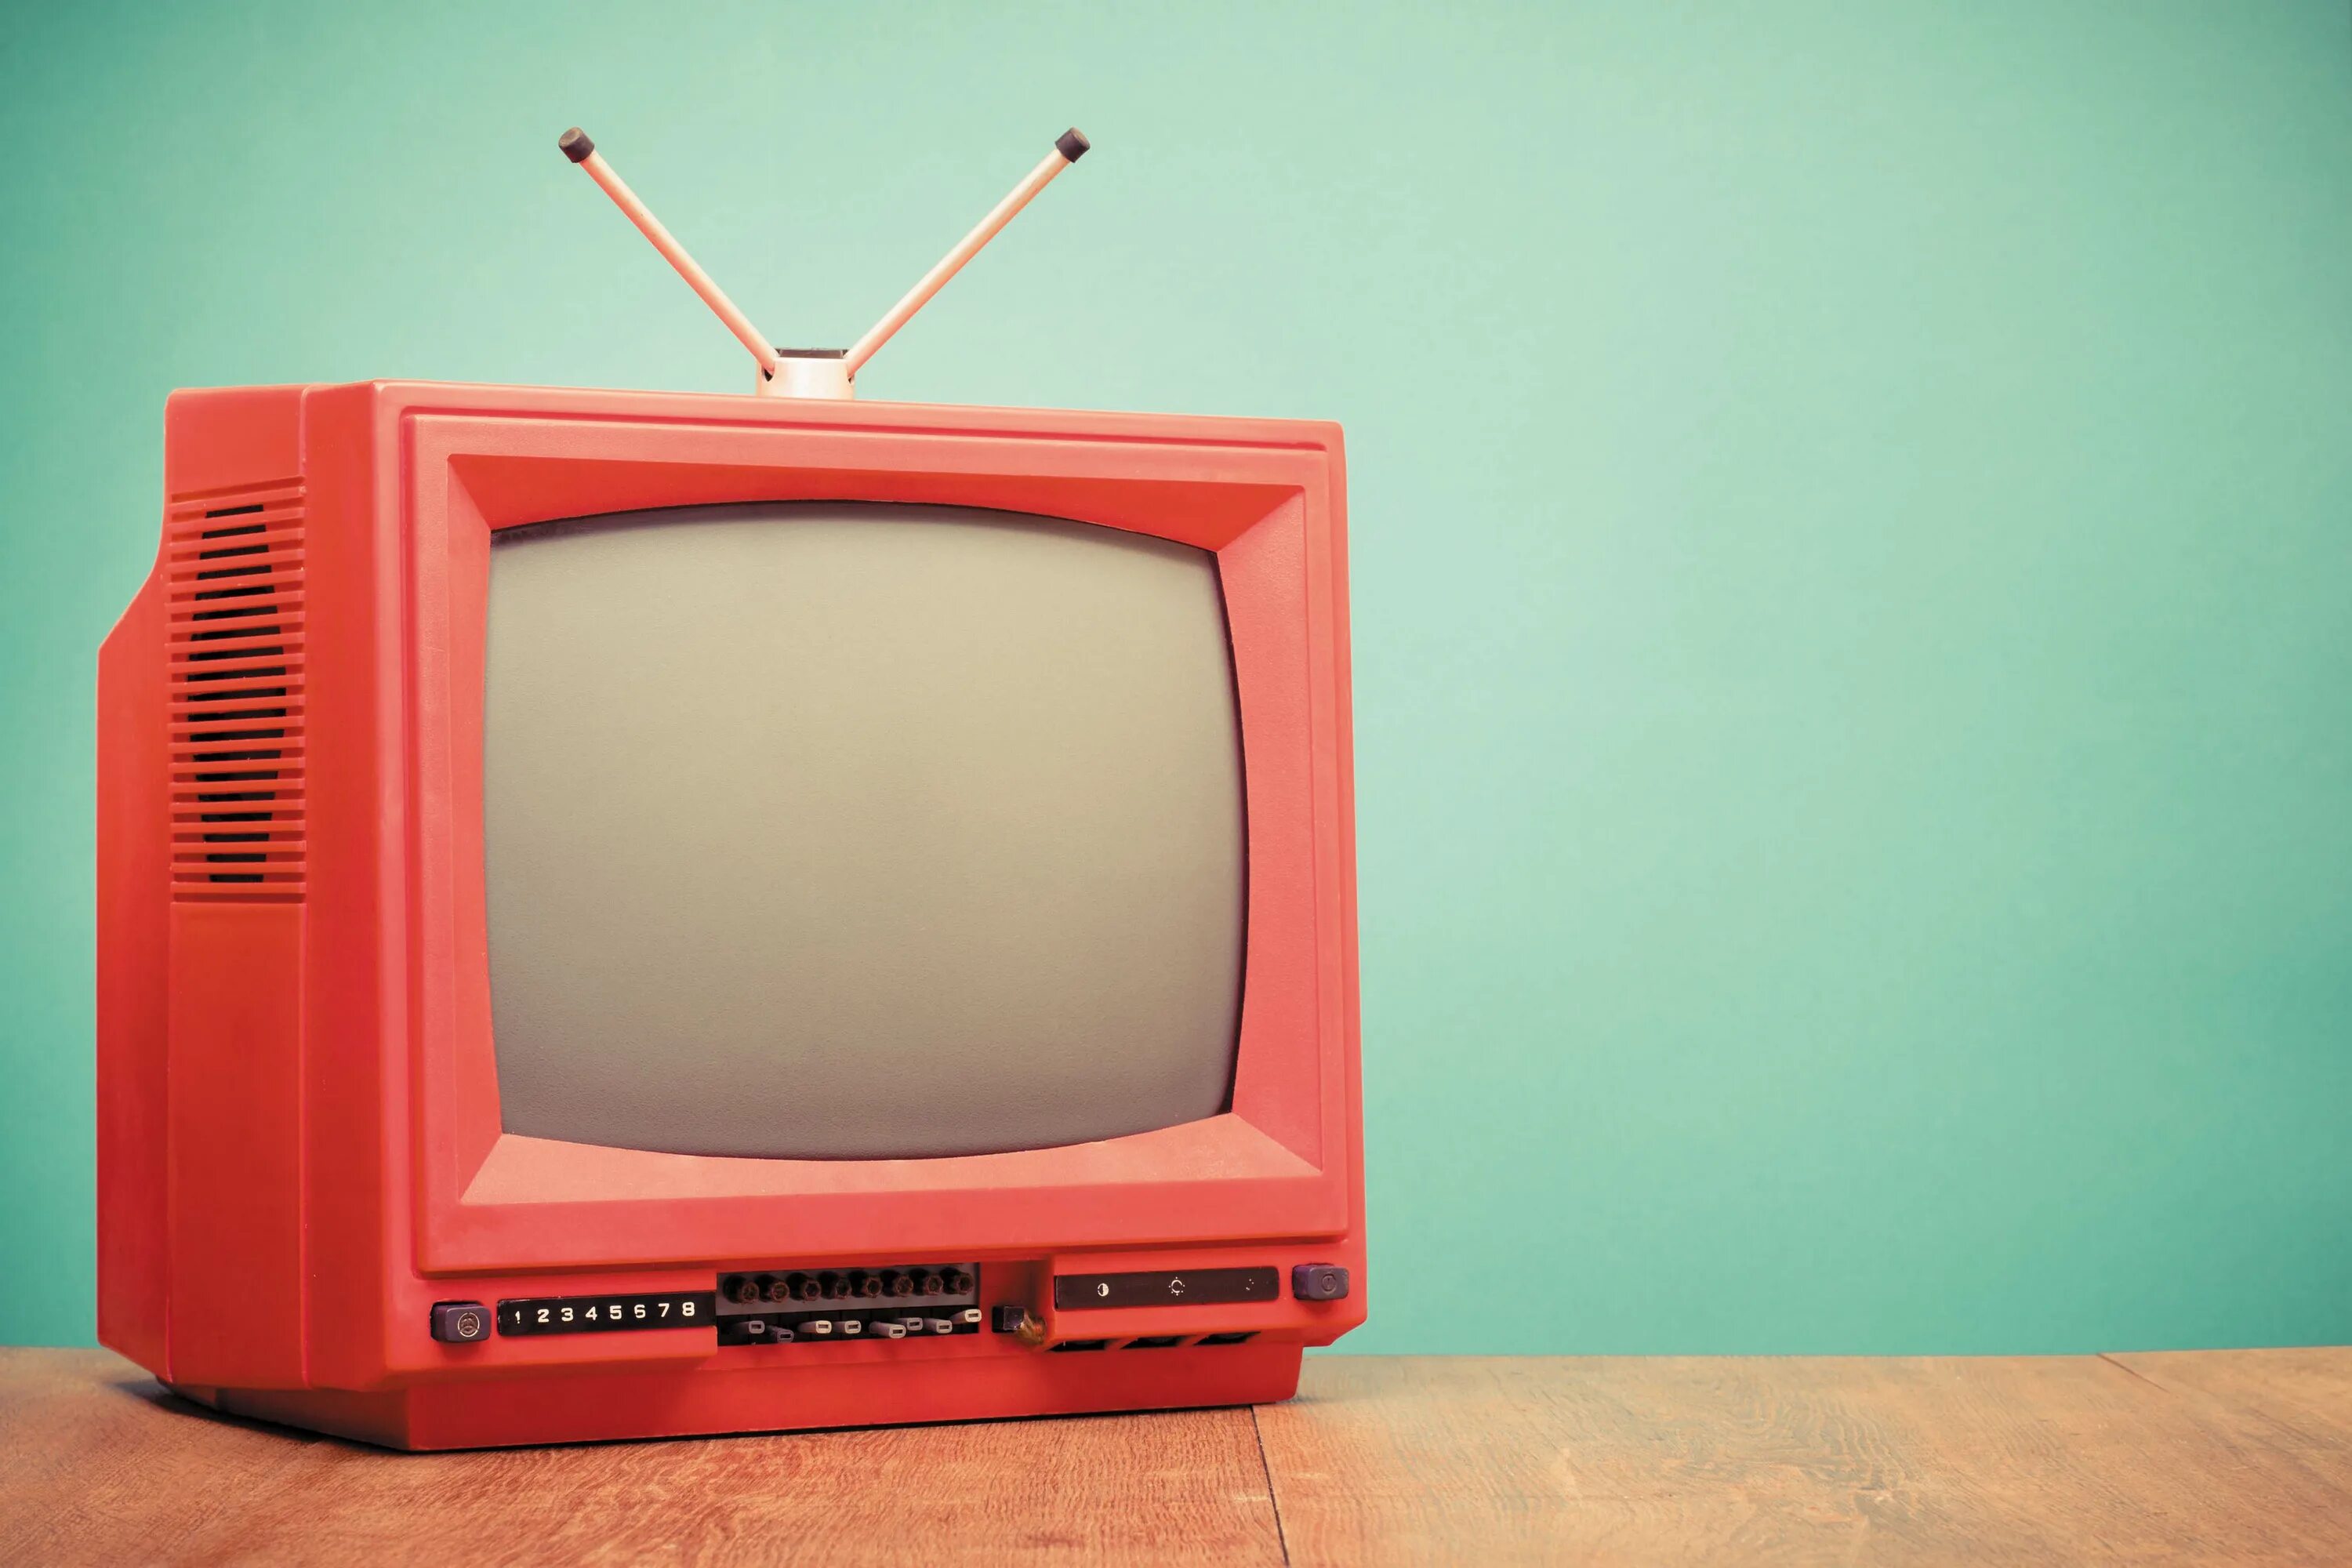 Изображение телевизора красное. Старый телевизор. Старый красный телевизор. Телевизор ретро красный. Ретро мини телевизор.